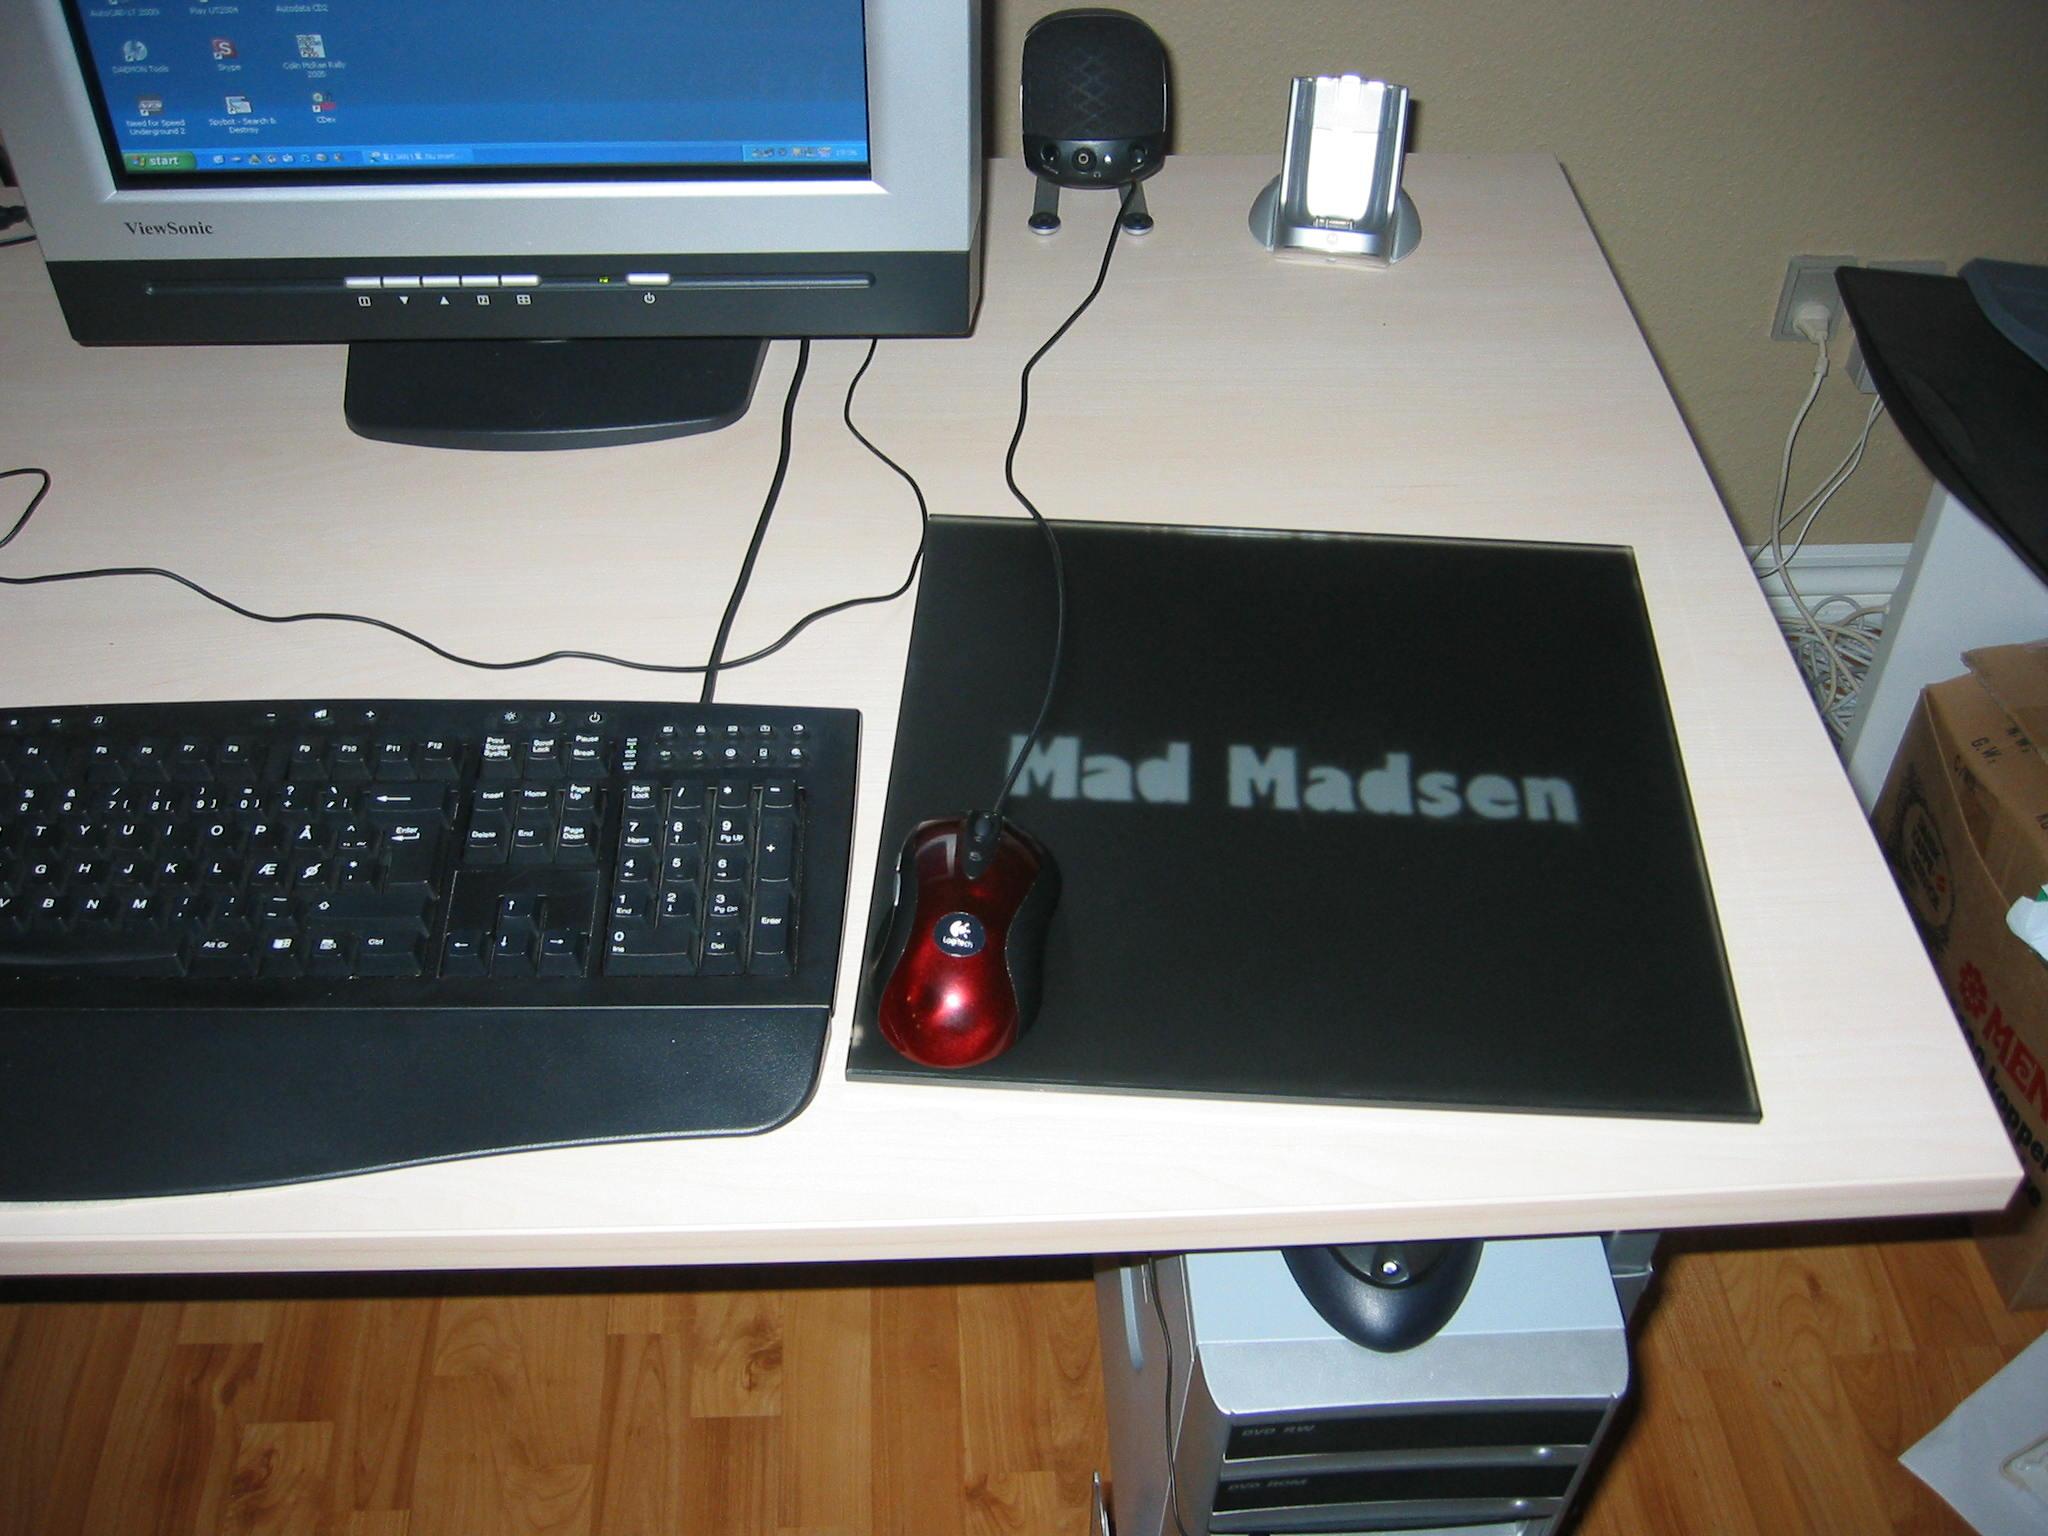 Mad-Madsen